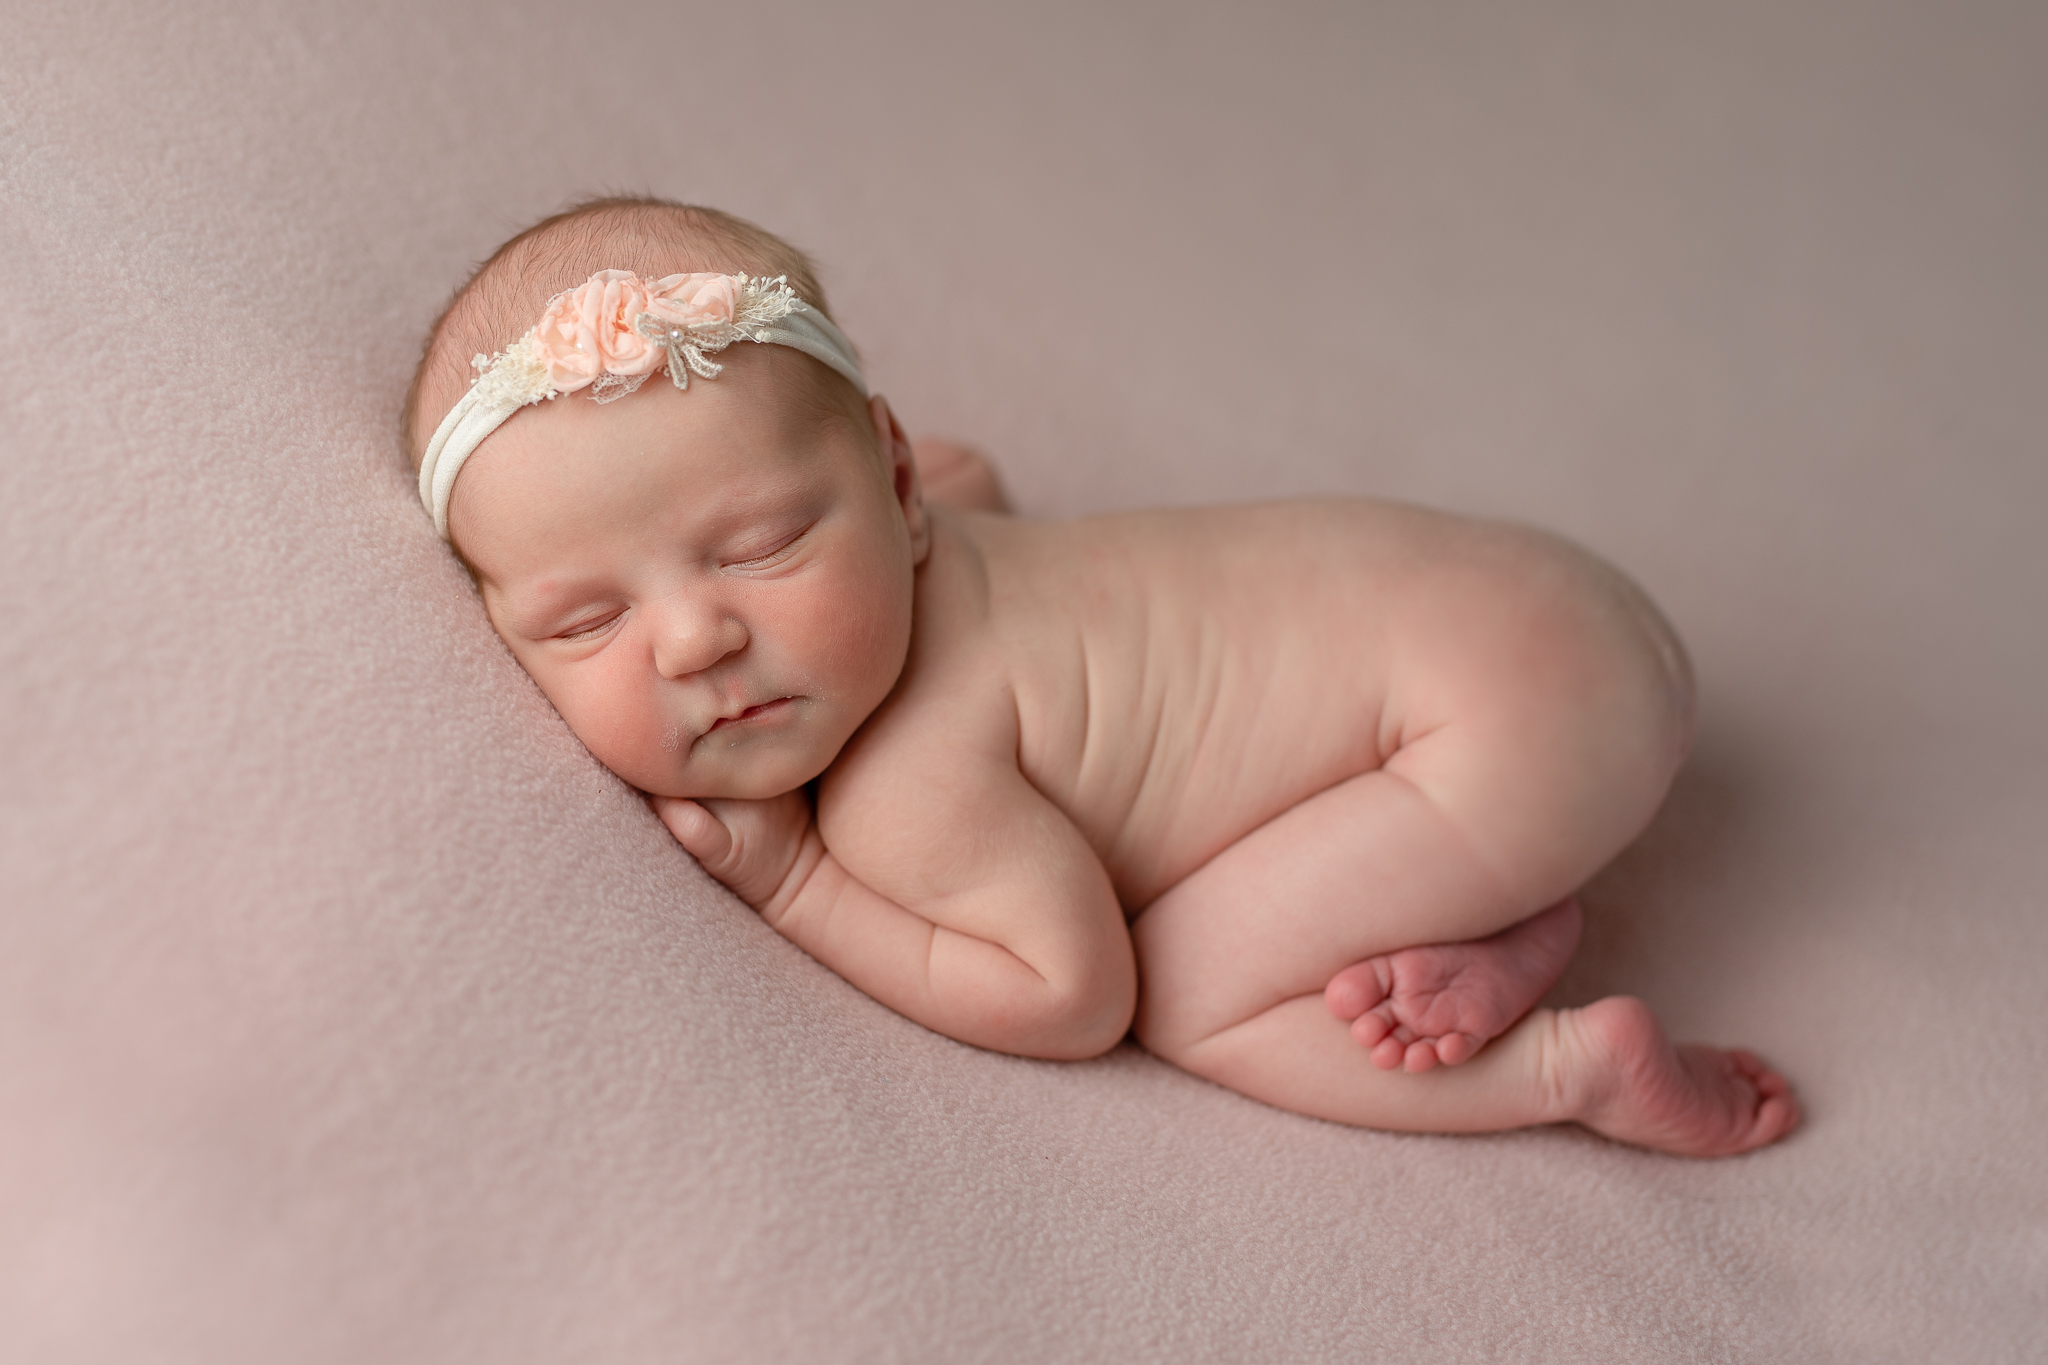 Newborn205NaomiLuciennePhotography032019-Edit.jpg